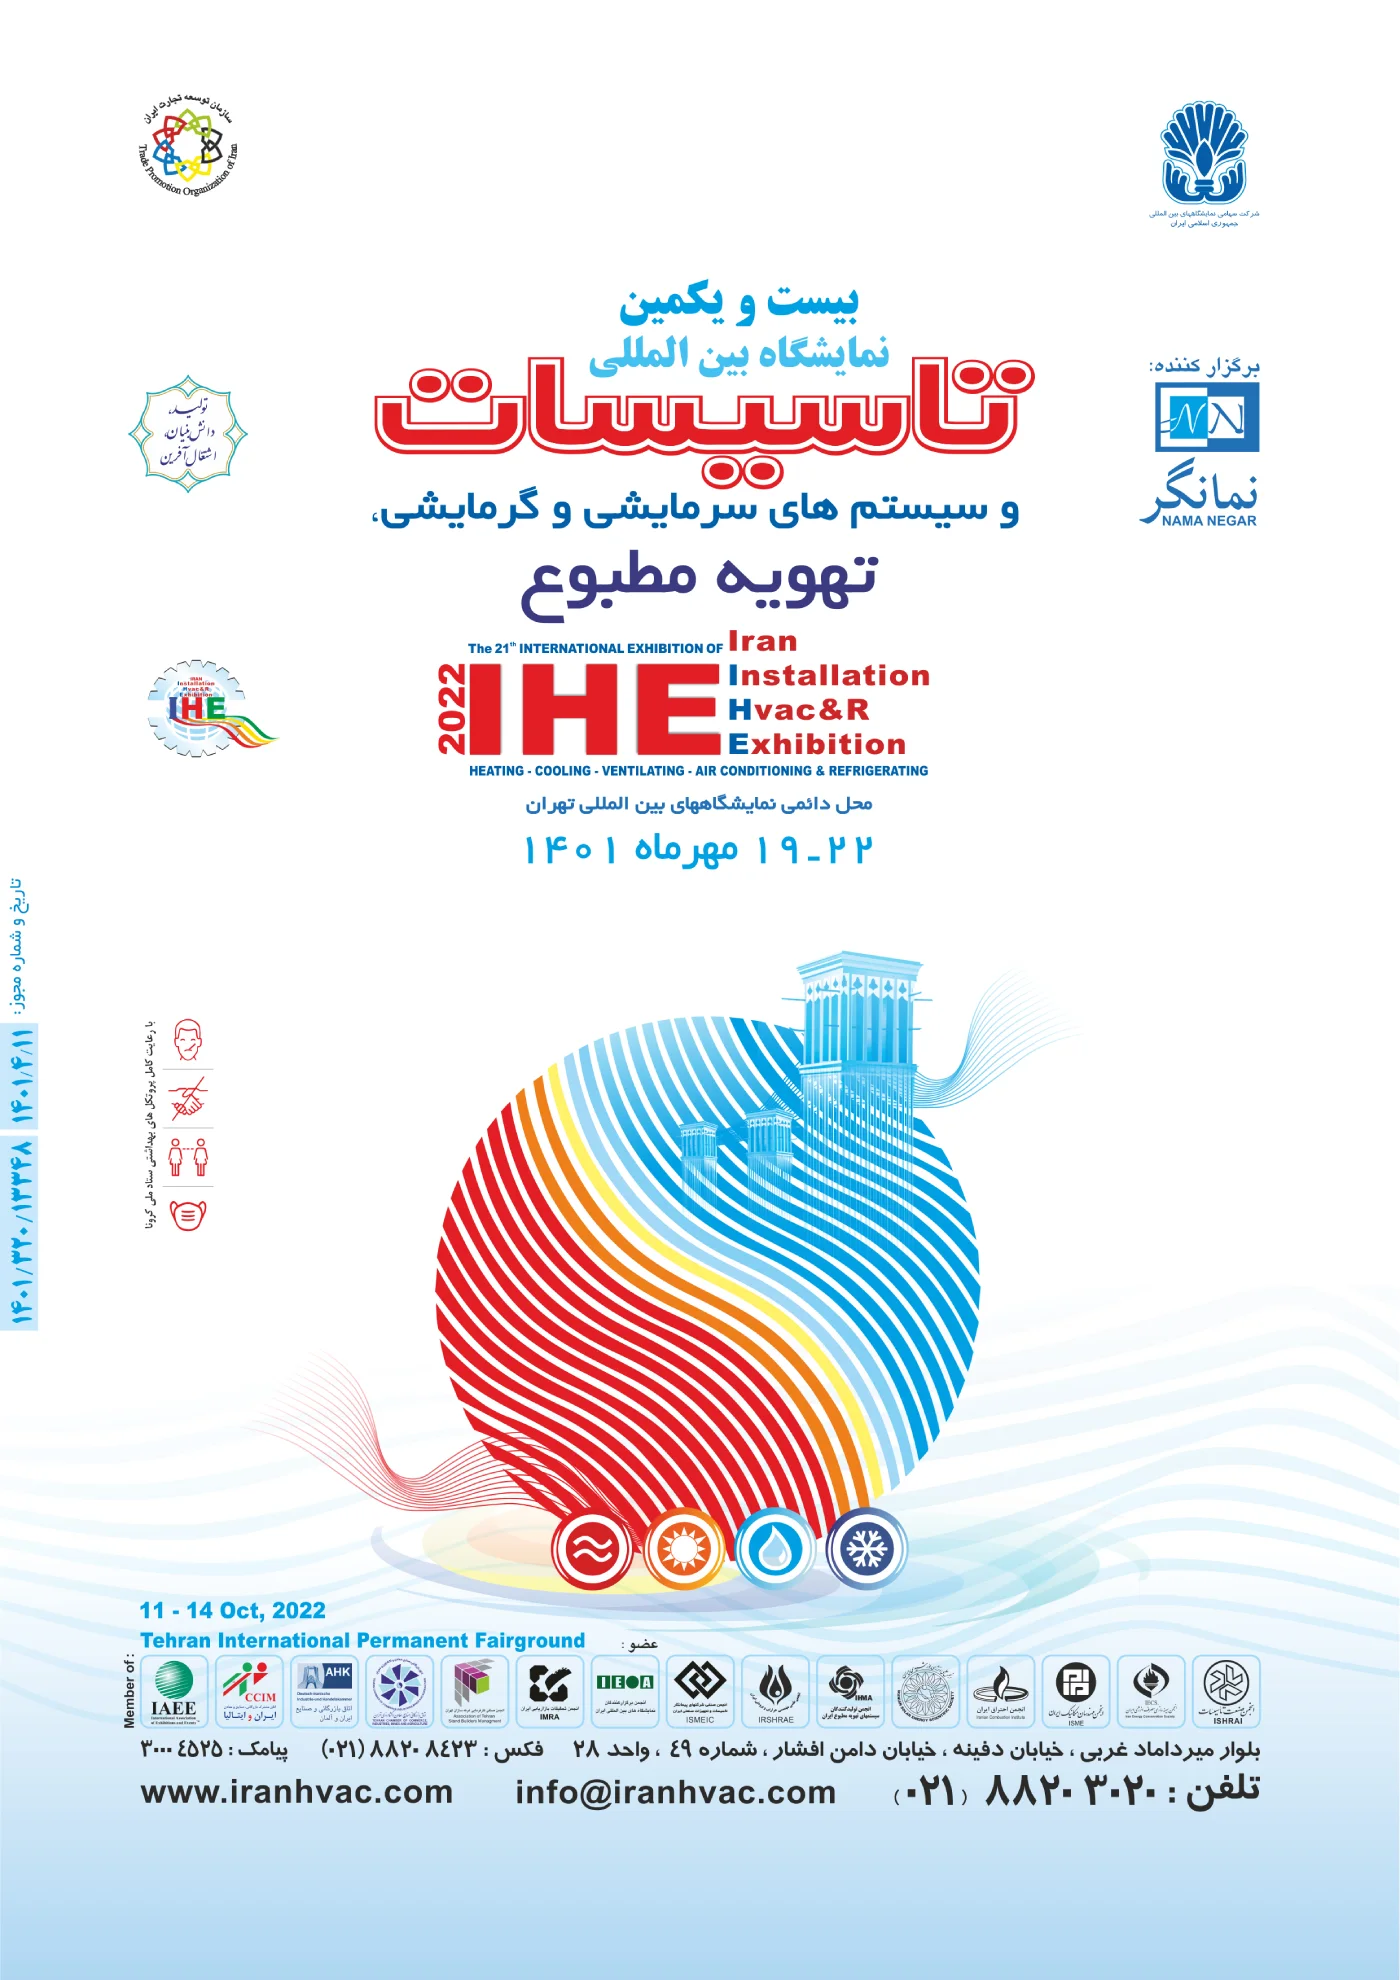 The 21th International Exhibition of IRAN HVAC&R